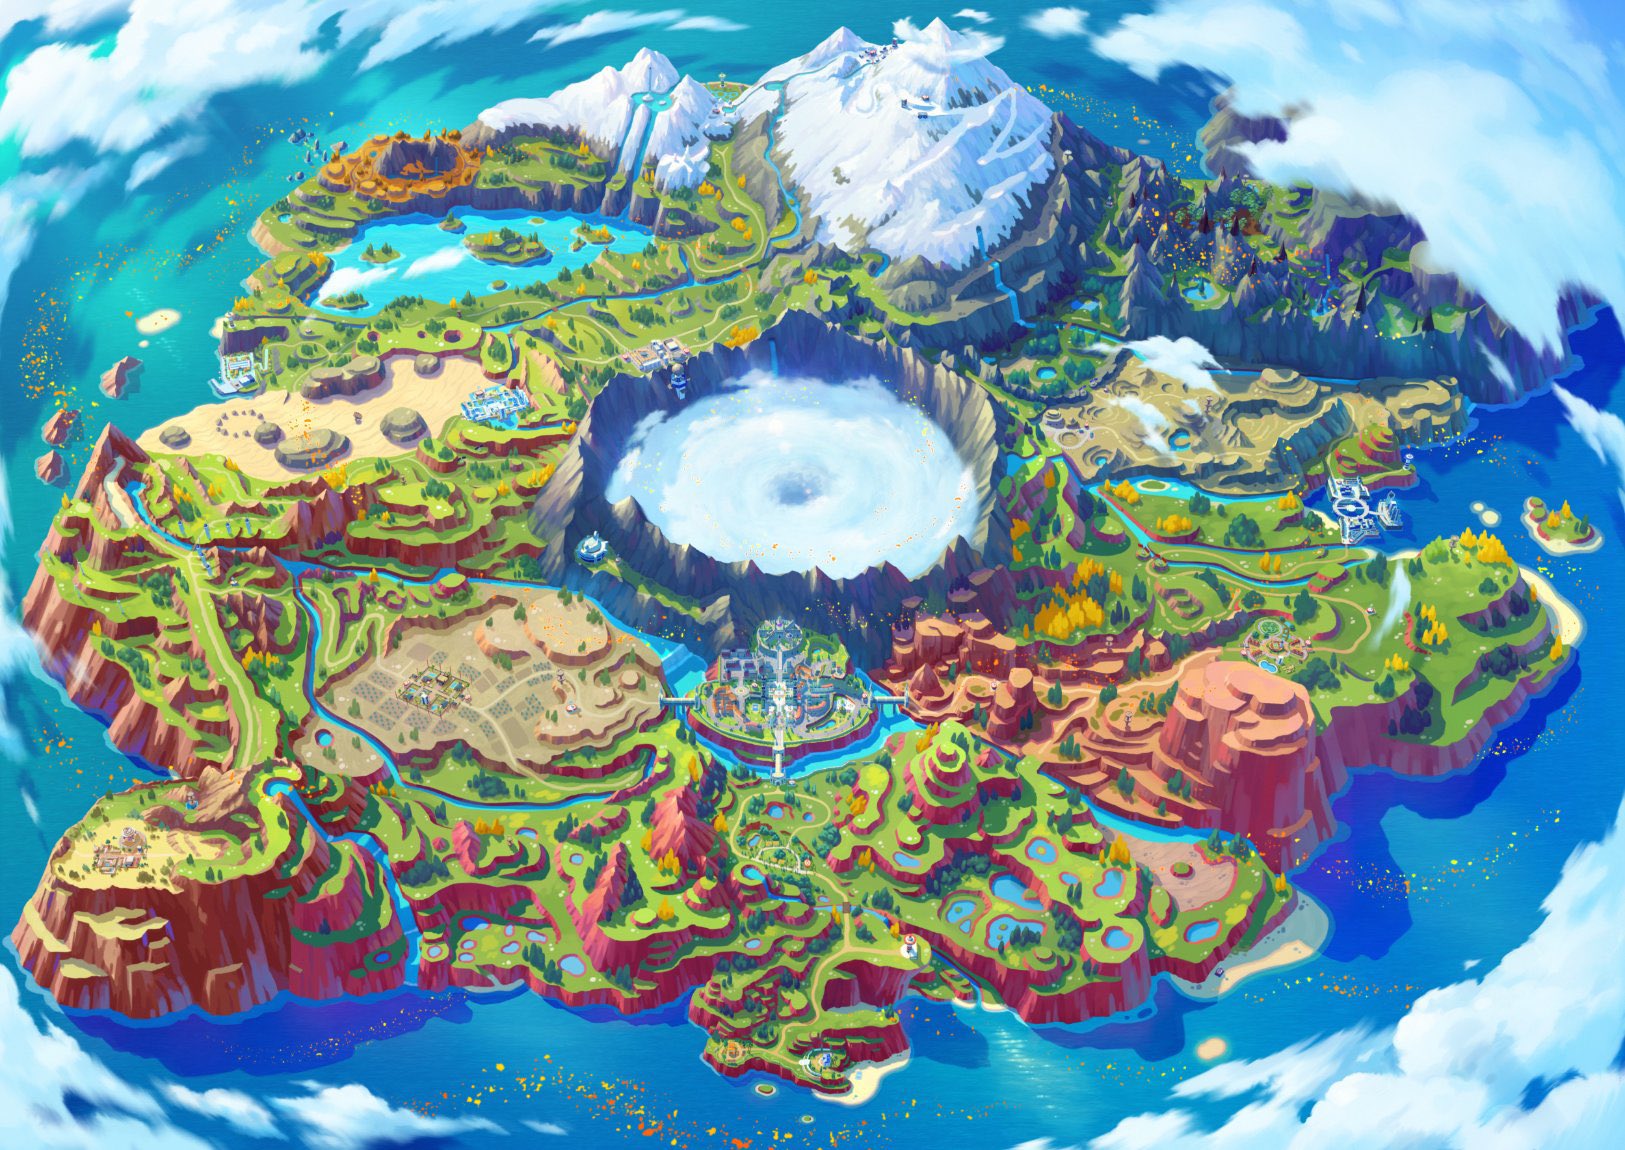 Pokémon Scarlet and Violet's new region of Paldea.